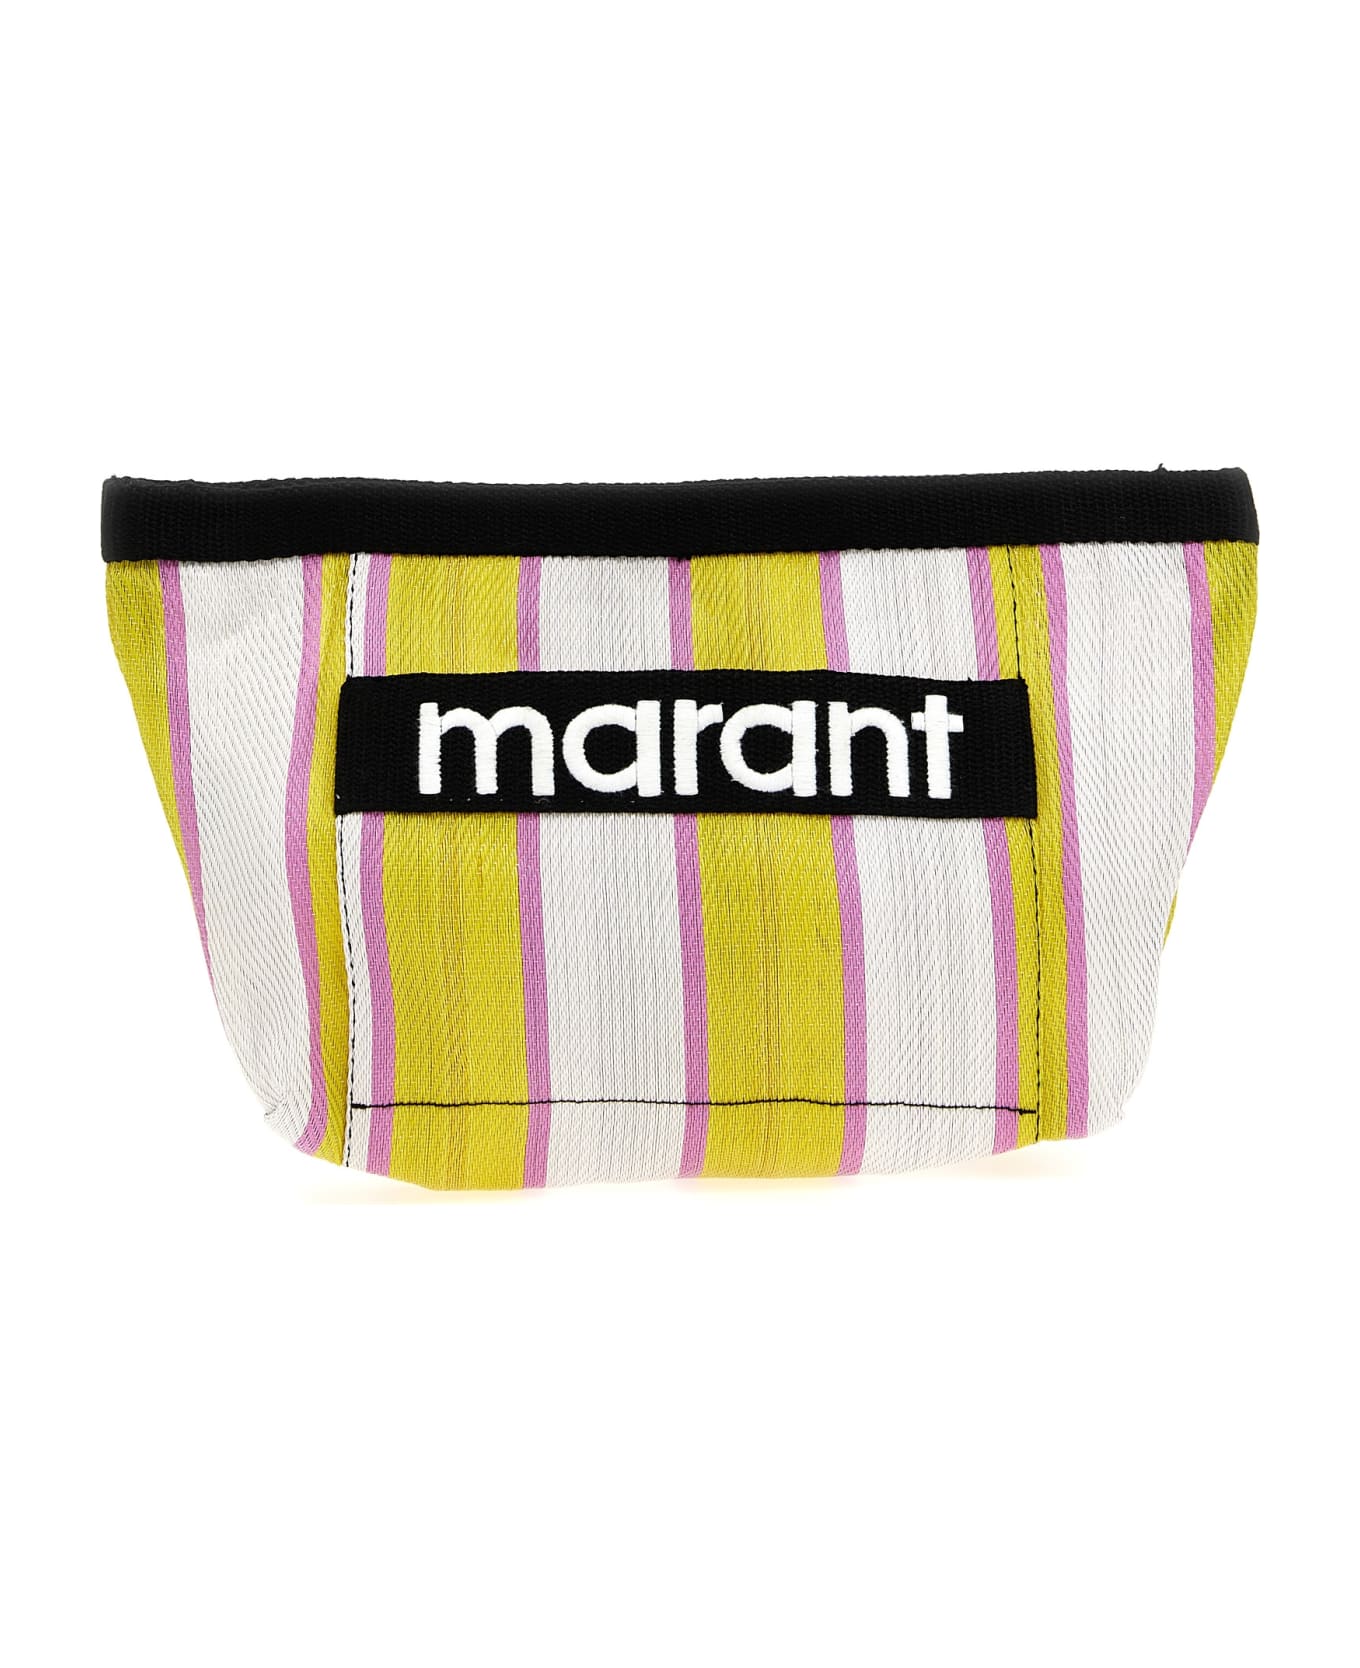 Isabel Marant Powden Nylon Clutch Bag - Multicolor クラッチバッグ